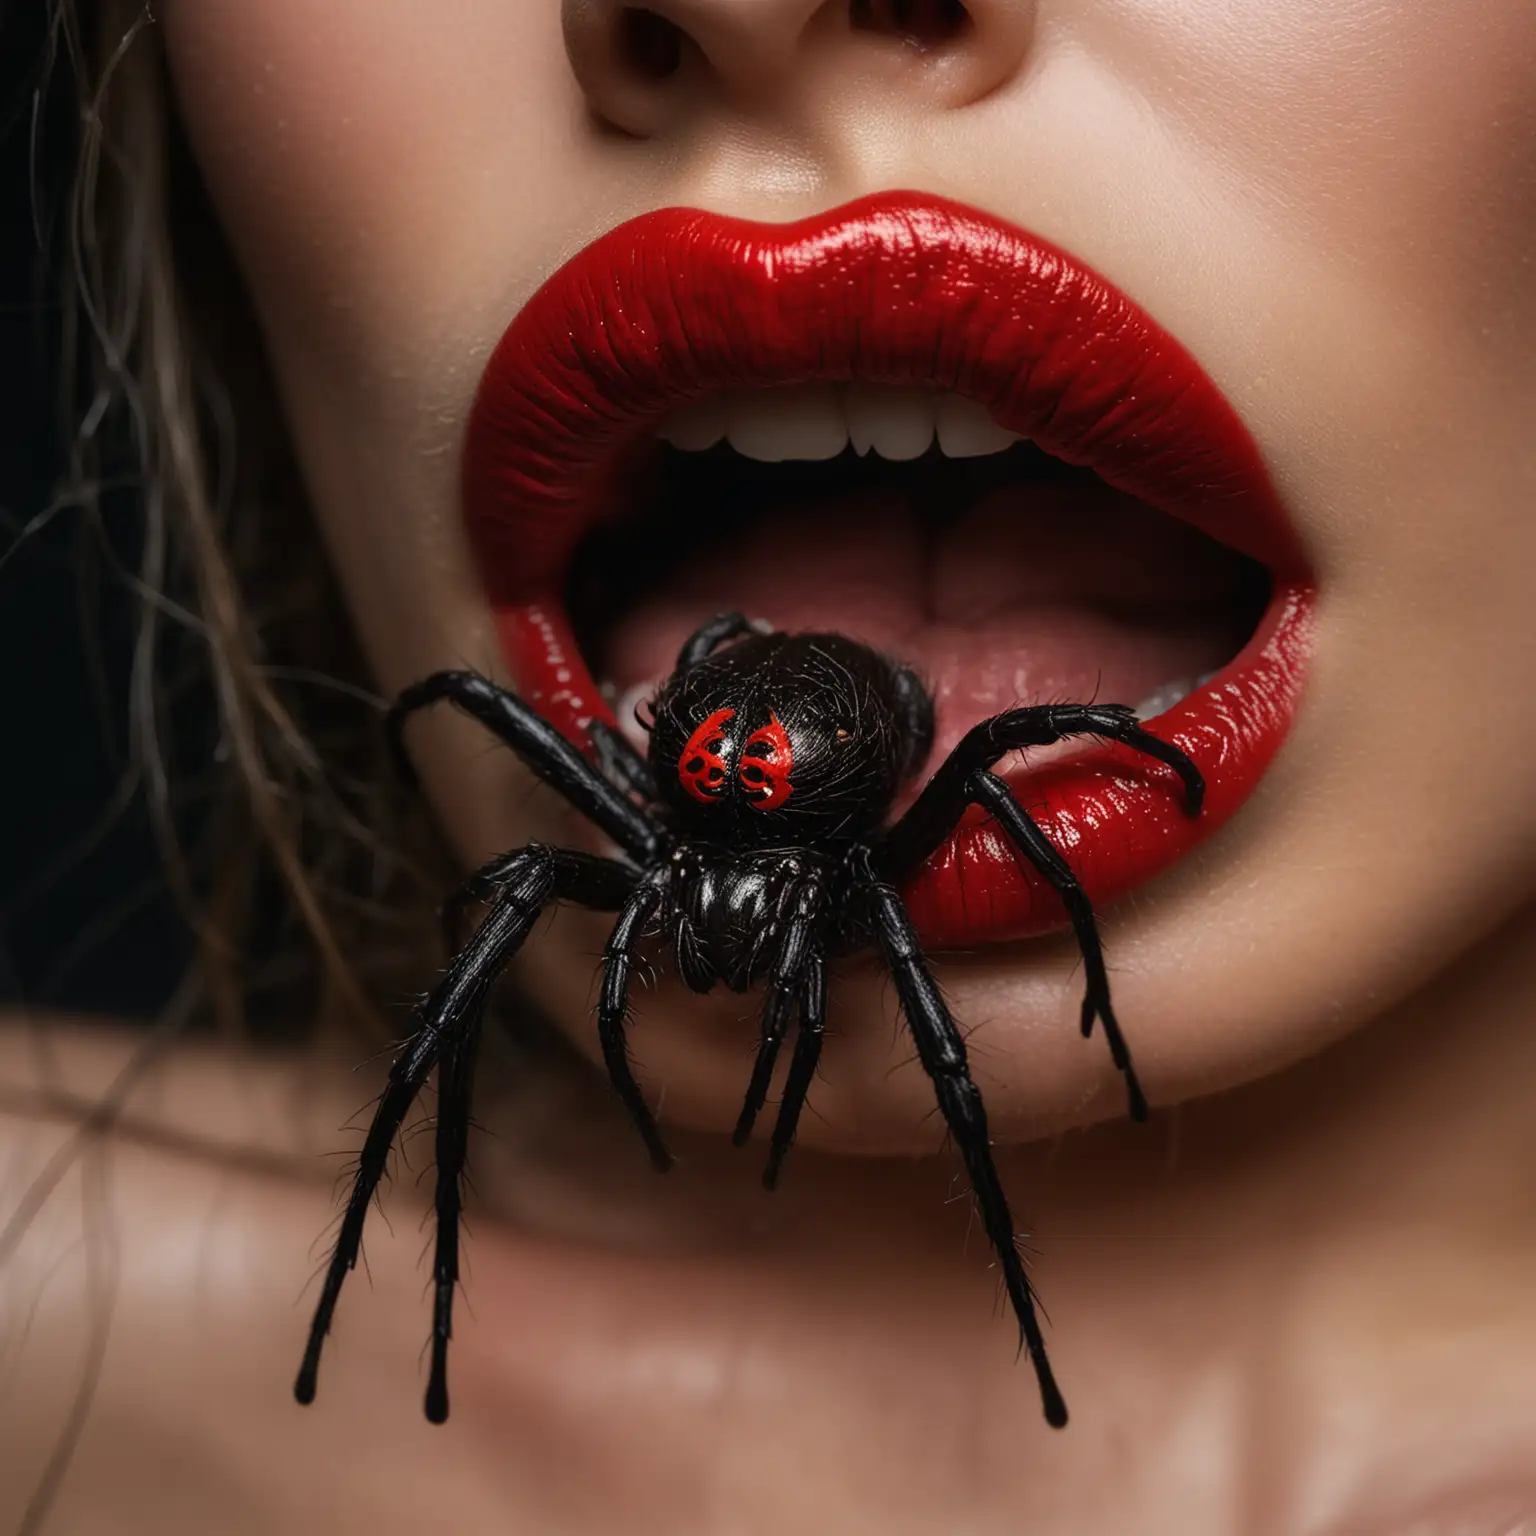 Sensual Spider Crawling on Womans Lips in Intense Dark Scene